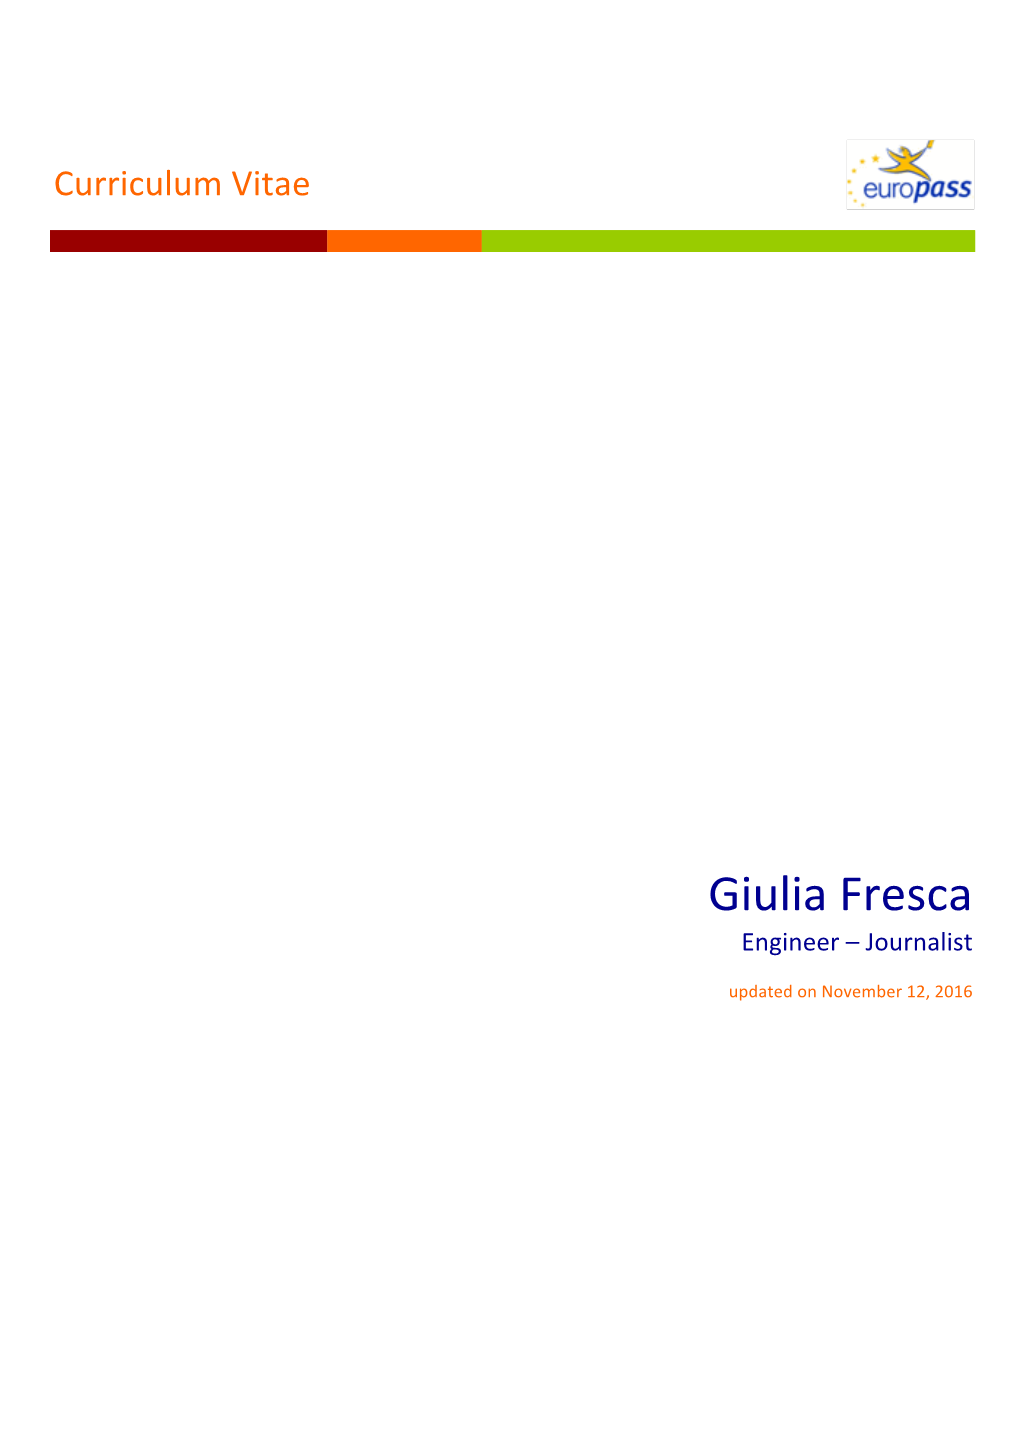 Giulia Fresca Engineer – Journalist